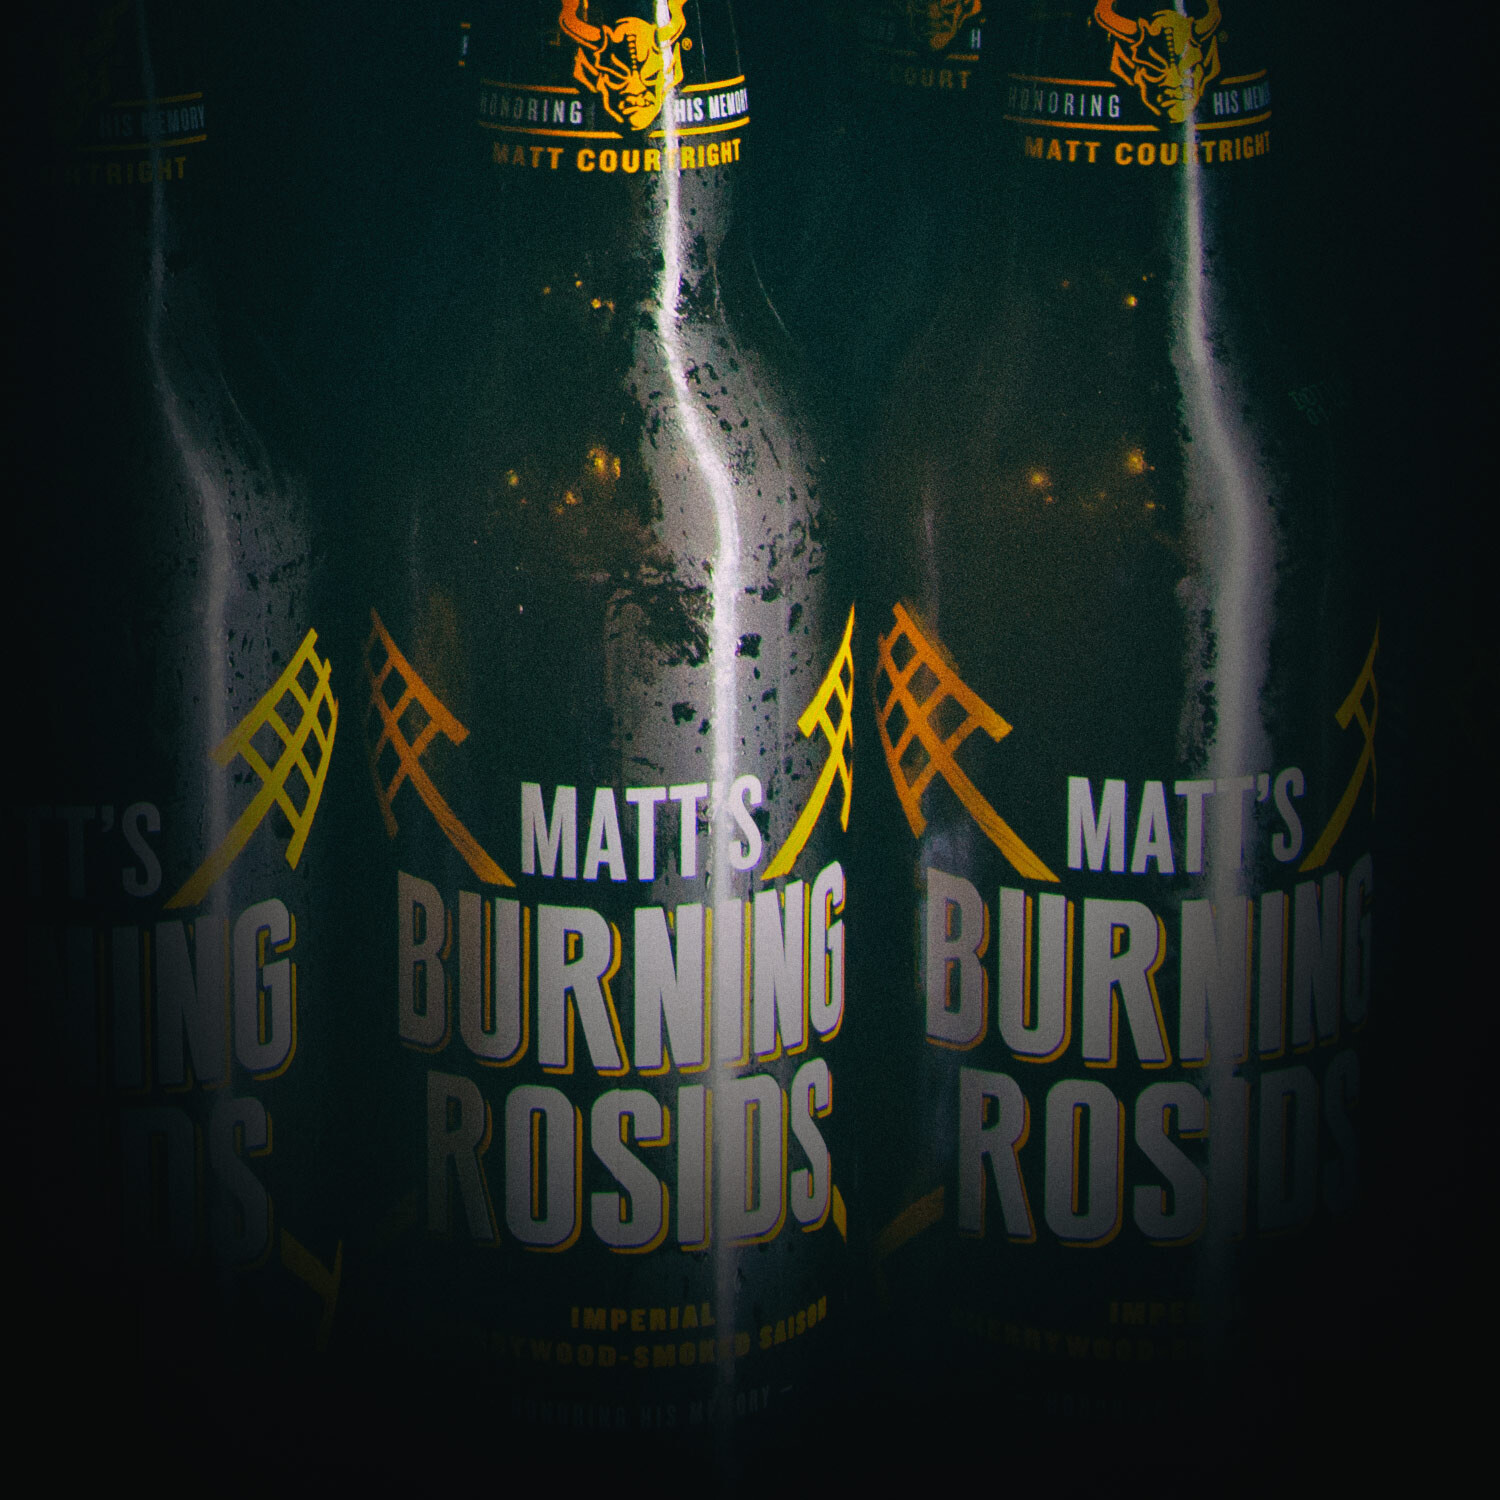 Matt's Burning Rosids Imperial Cherrywood-Smoked Saison bottles